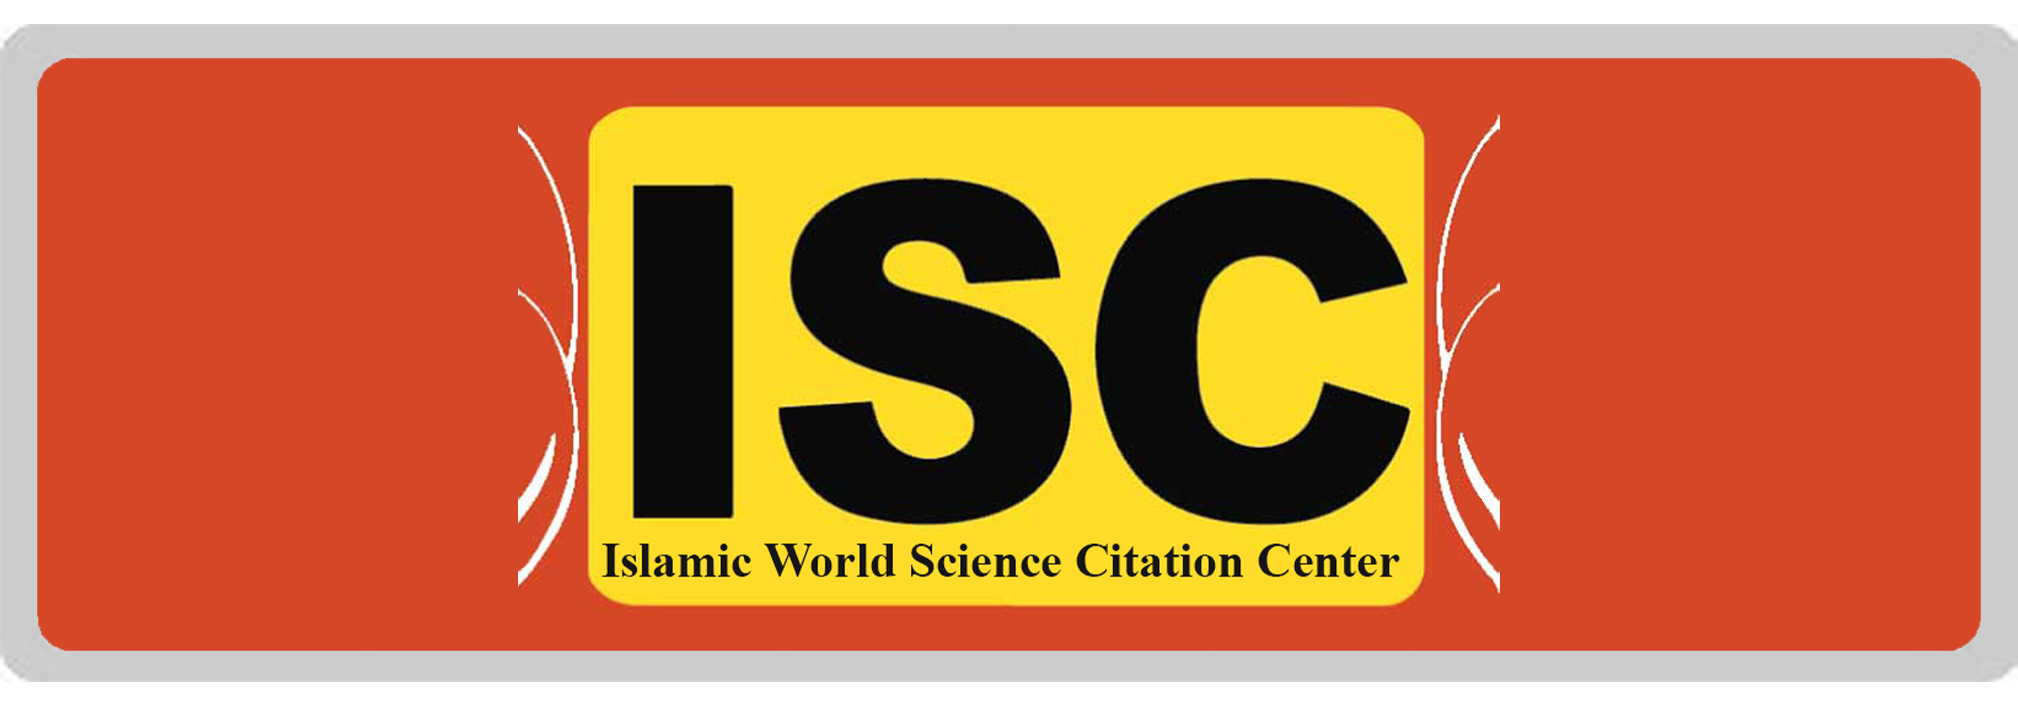 Islamic World Science Citation Center